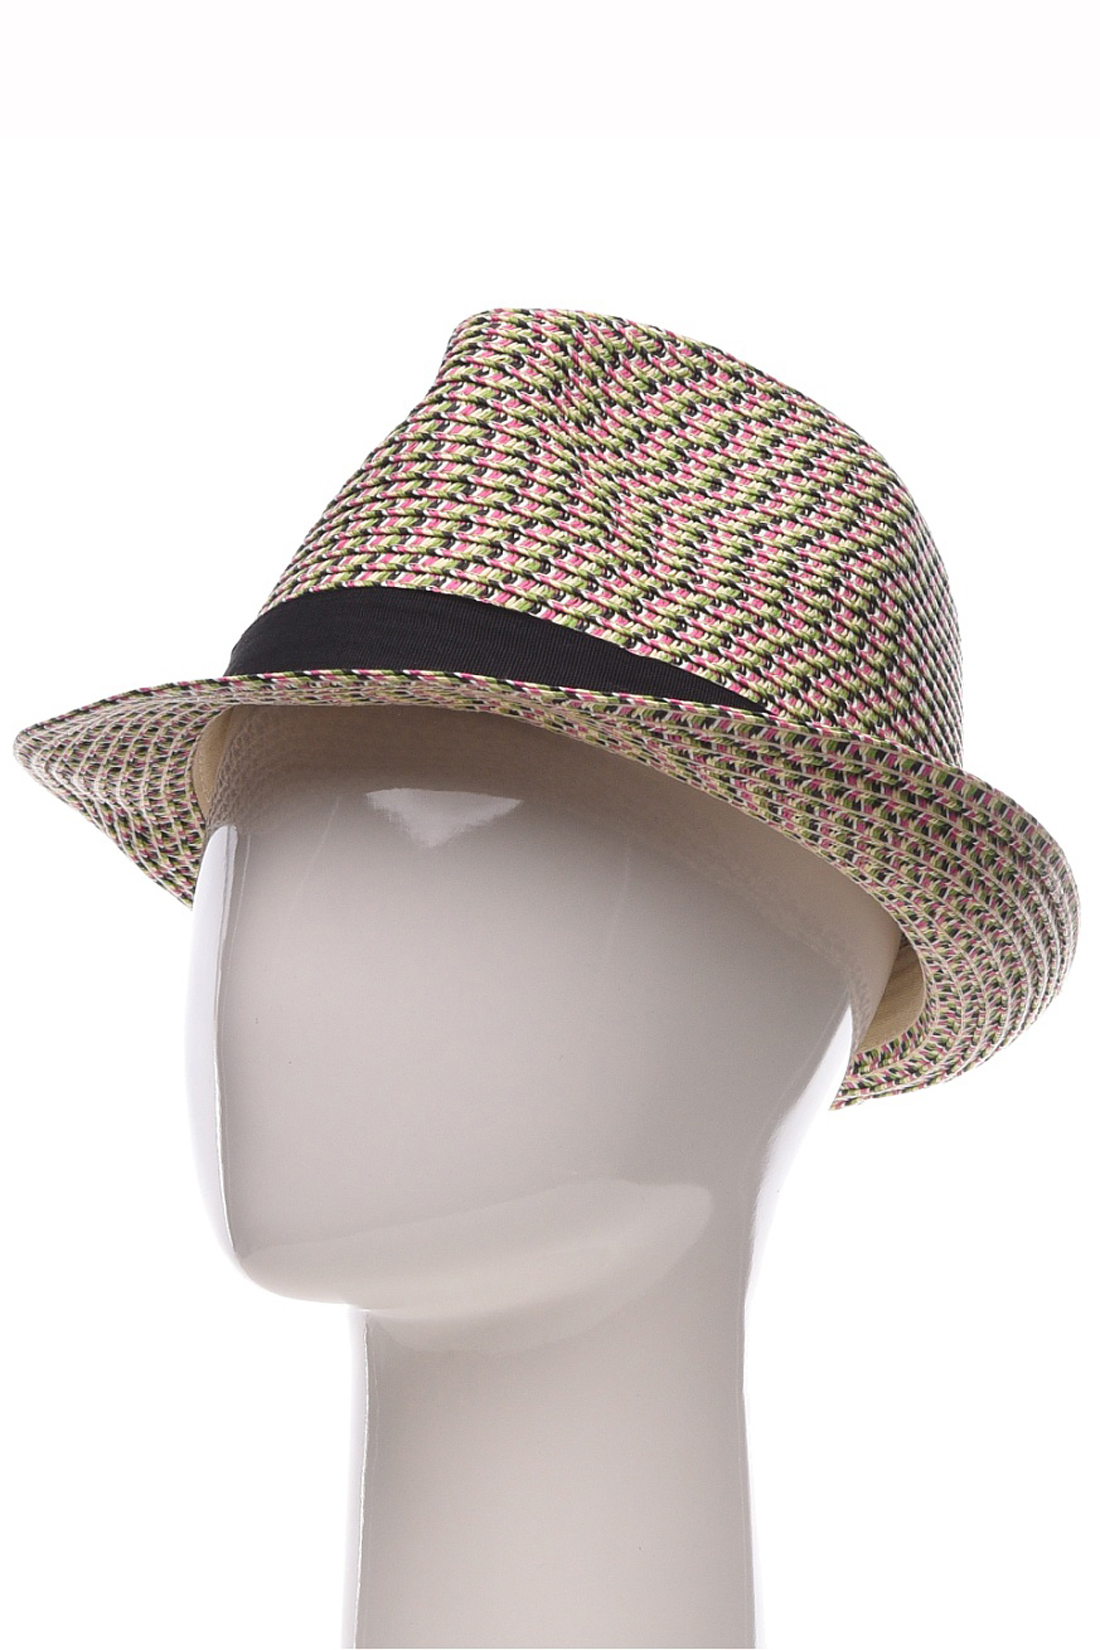 Шляпа с разноцветным плетением (арт. baon B849001), размер Б/р 58 Шляпа с разноцветным плетением (арт. baon B849001) - фото 1